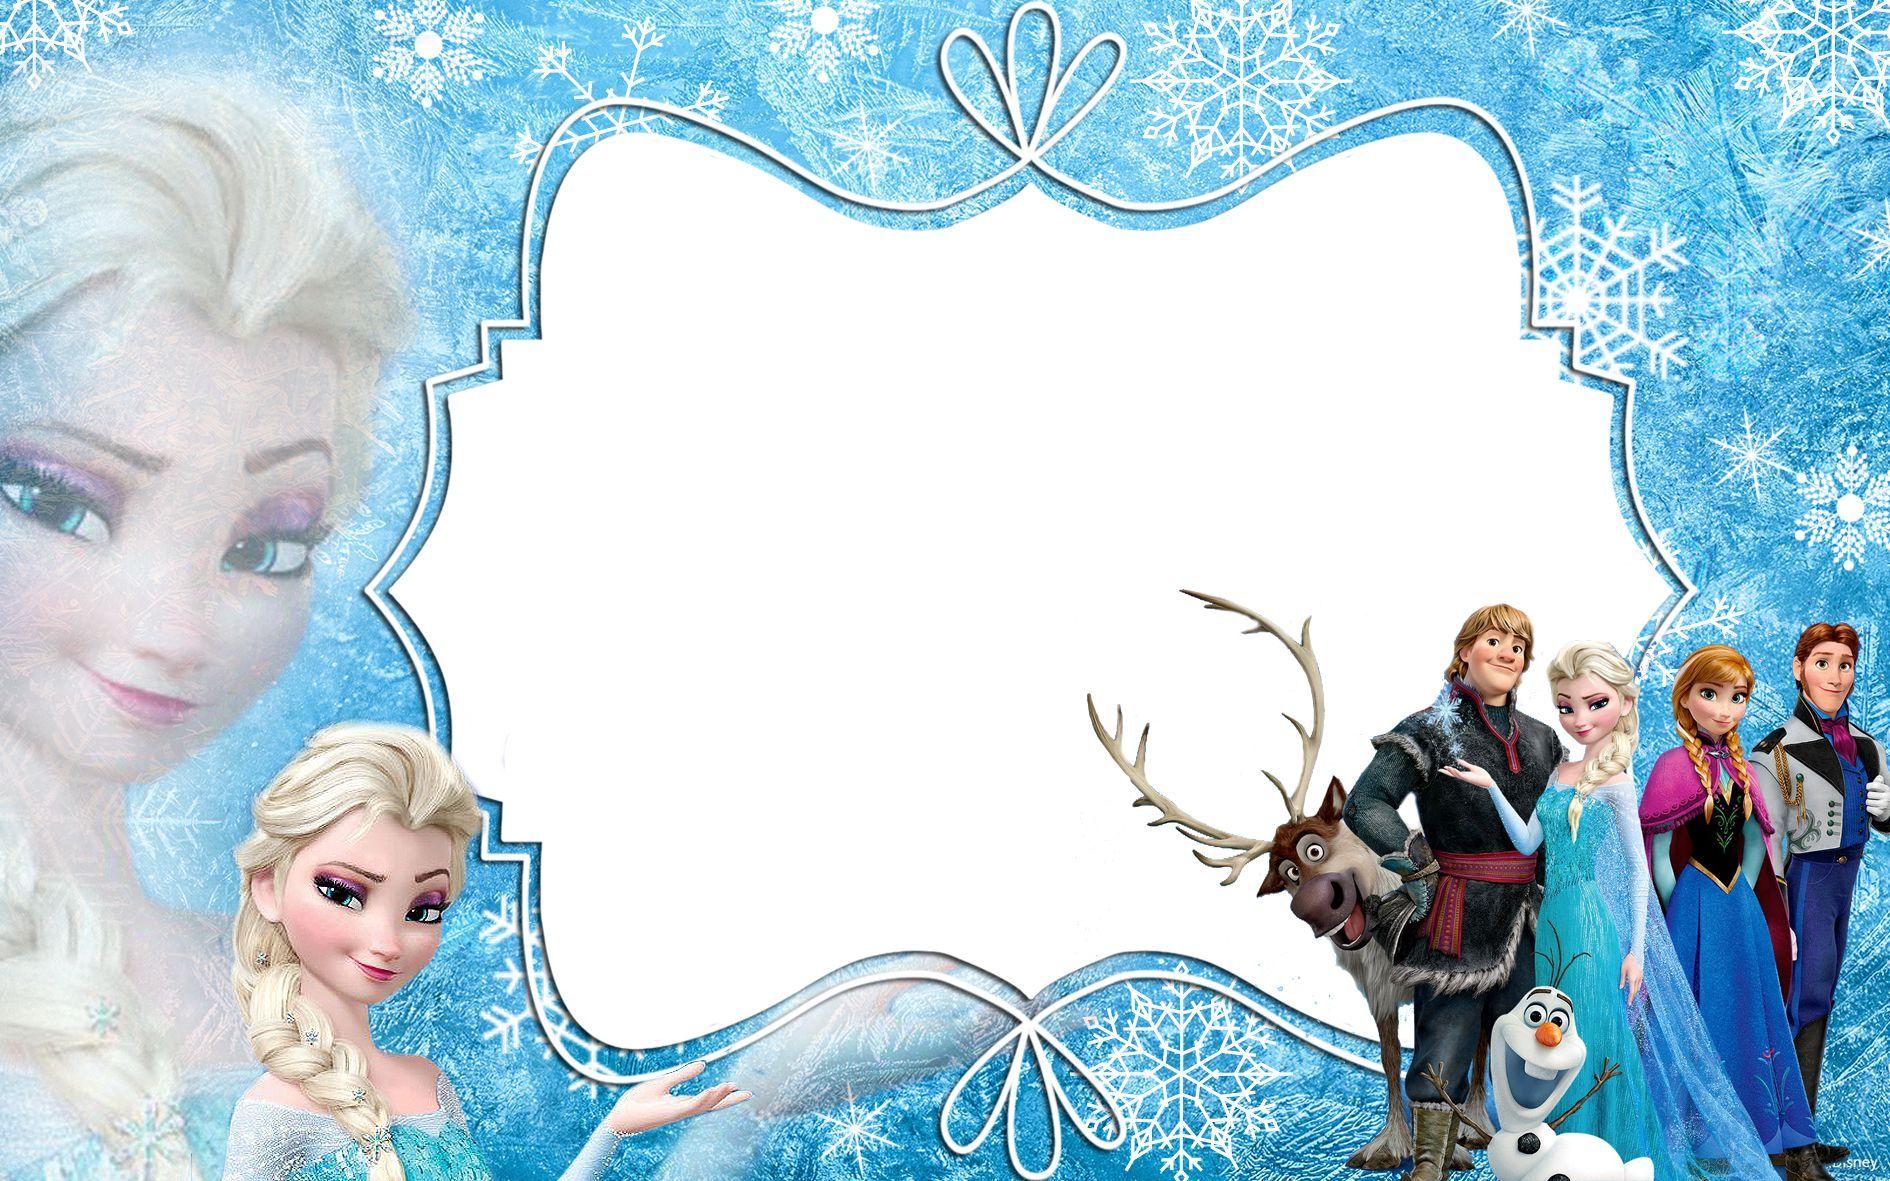 Frozen 2013 Movie Wallpaper Photo Collections. invitation